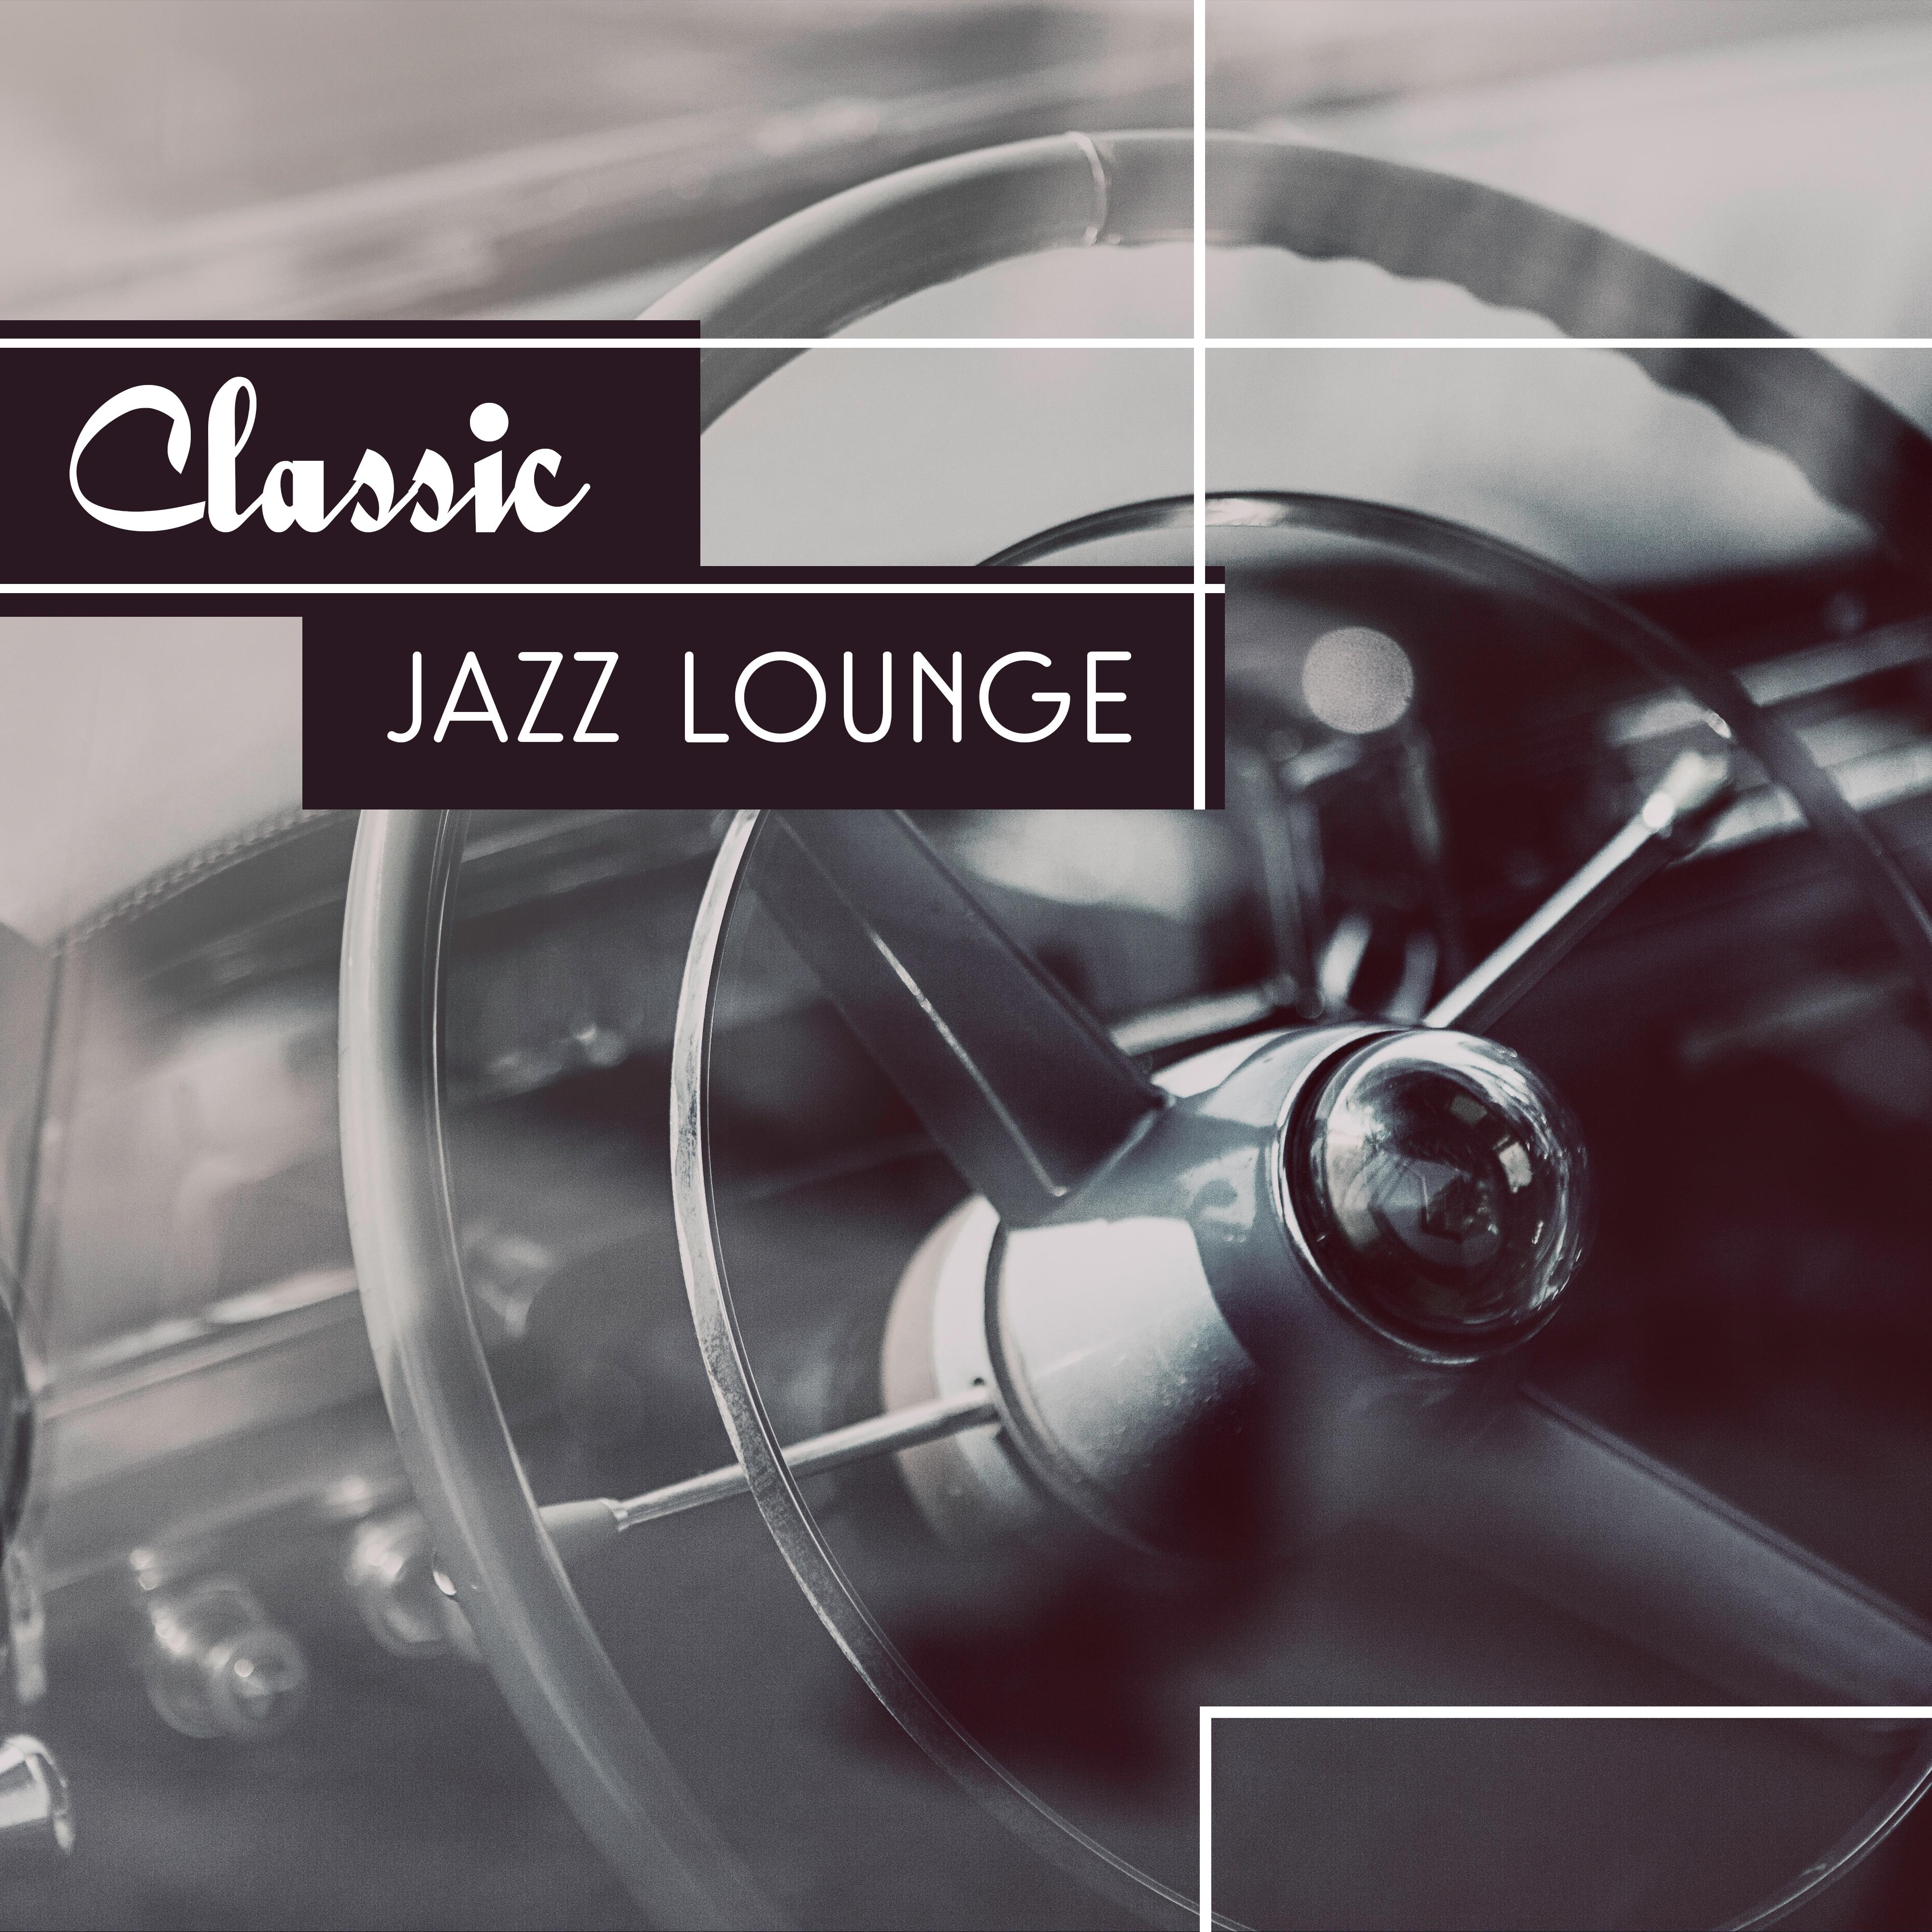 Classic Jazz Lounge  Instrumental Music, Calm Piano, Smooth Jazz, Easy Listening Simple Piano Music